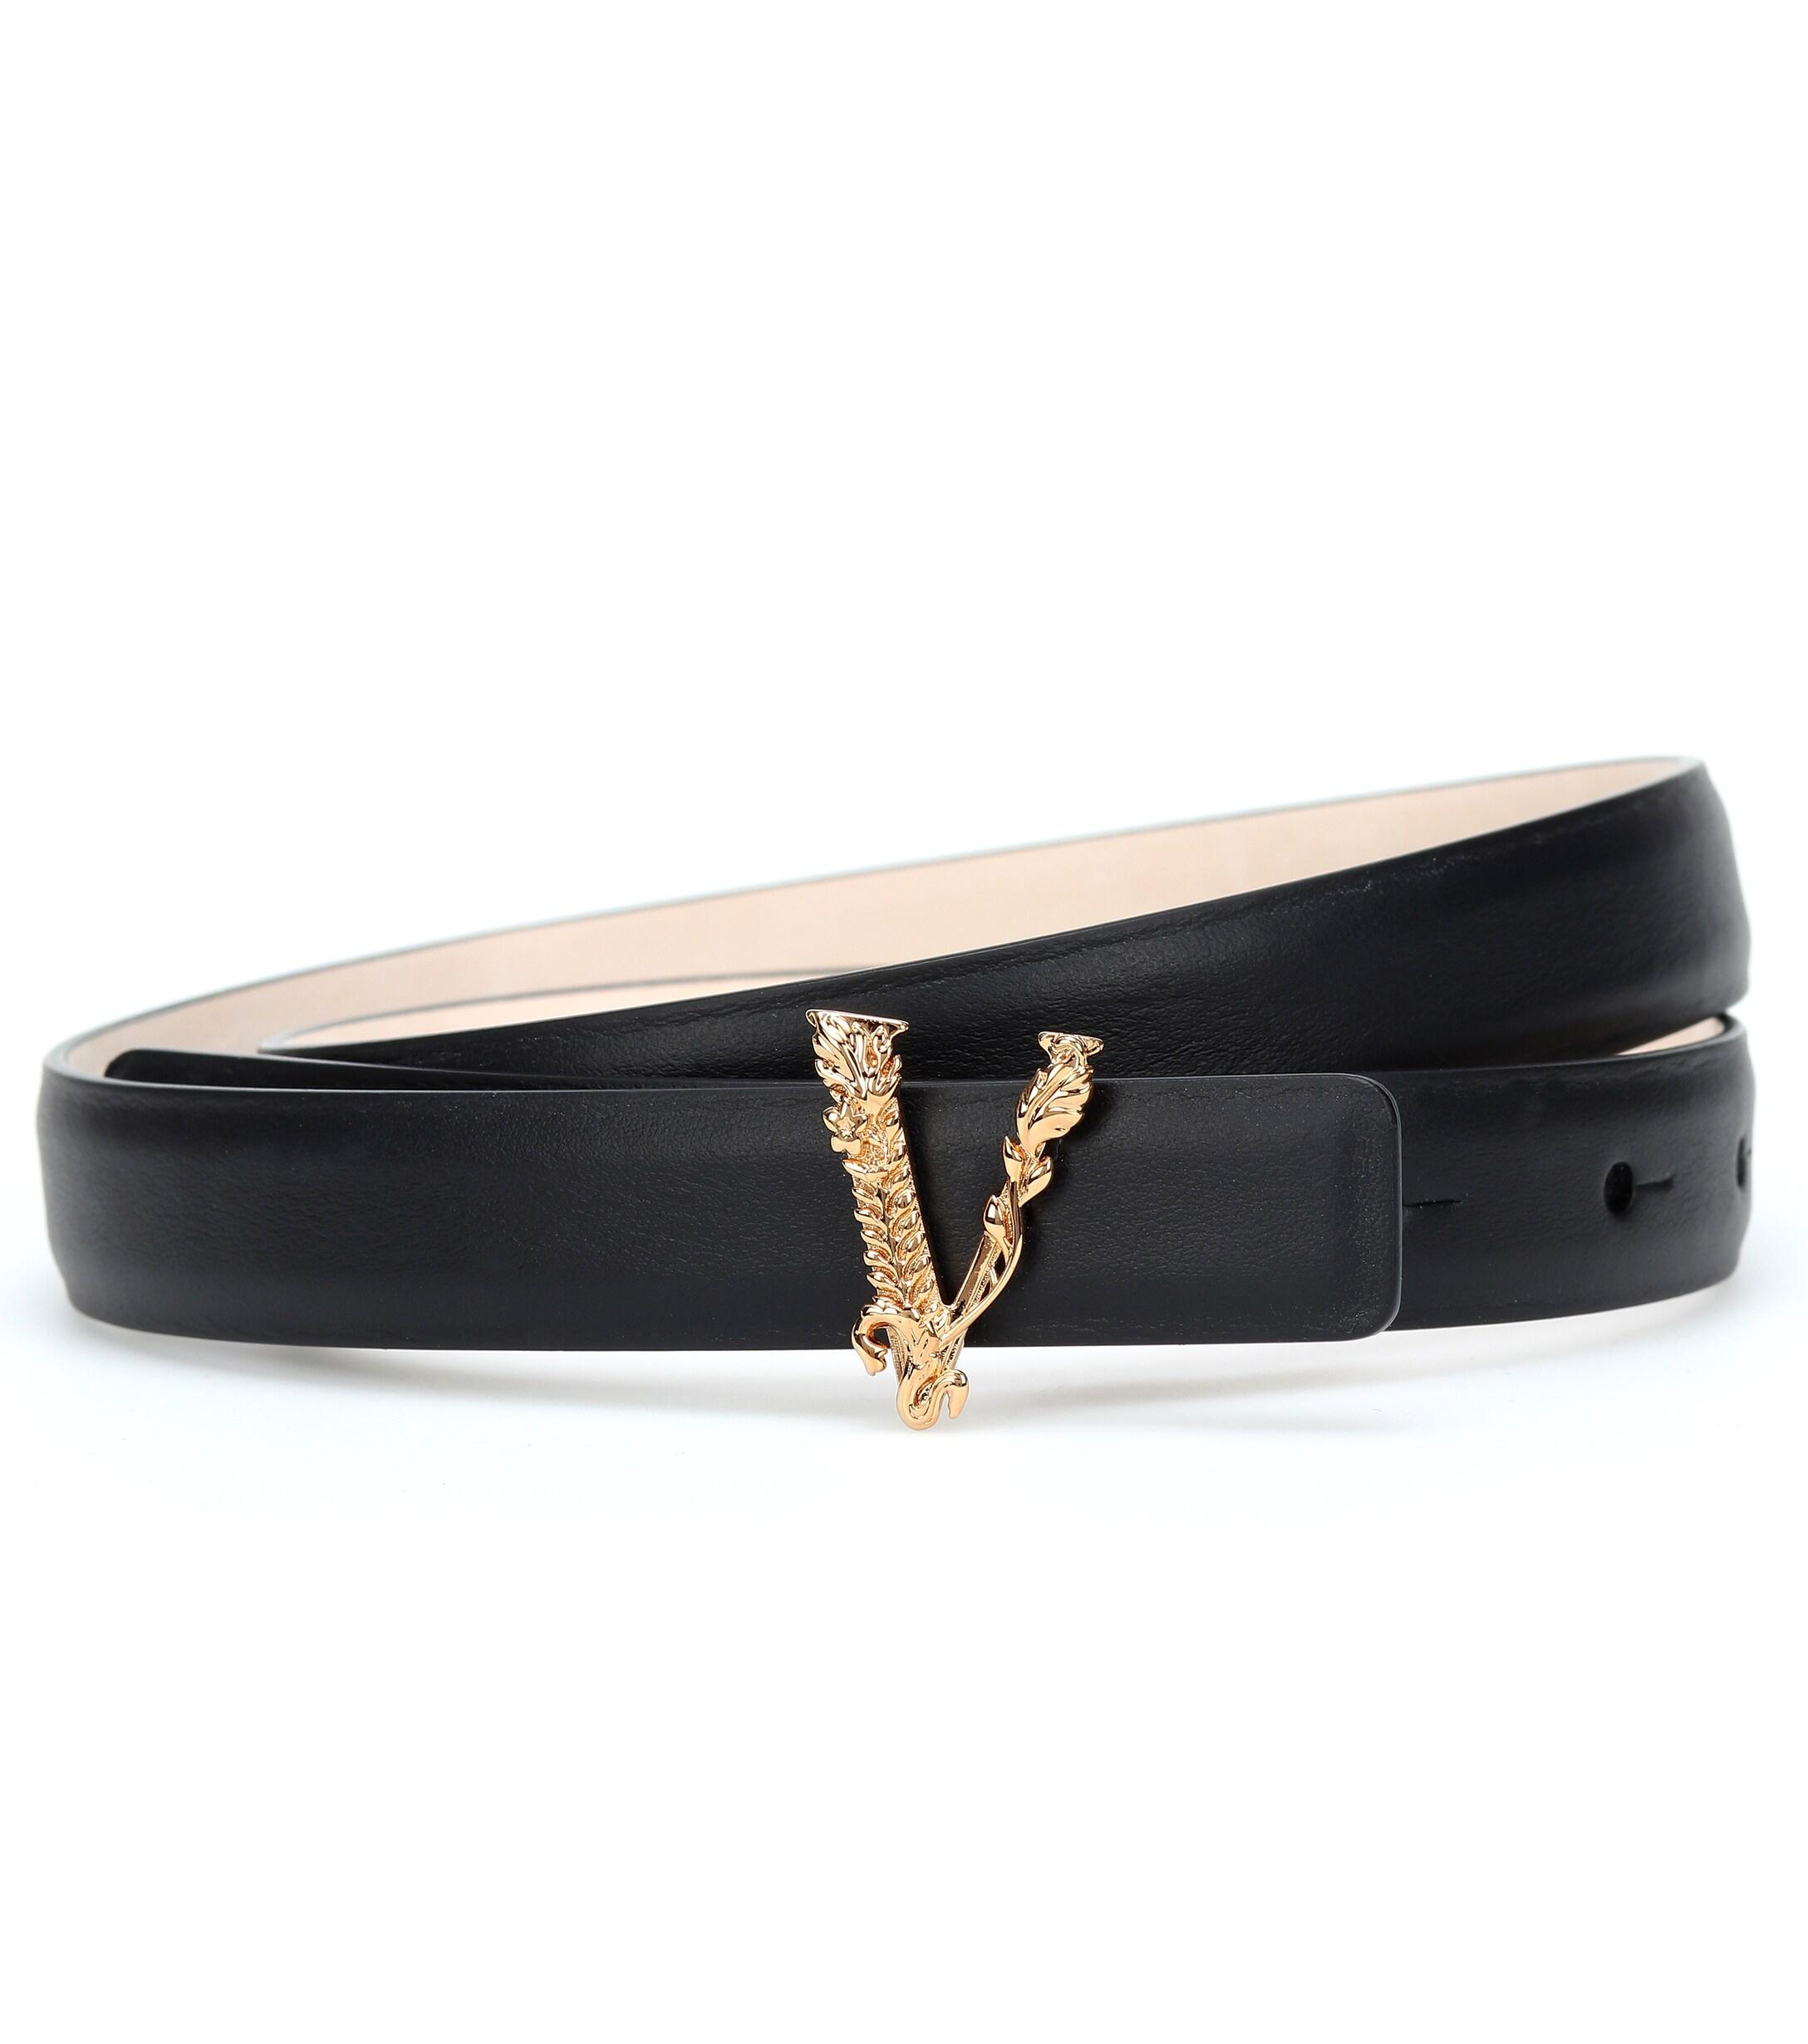 Versace Virtus Leather Belt in Black - Lyst